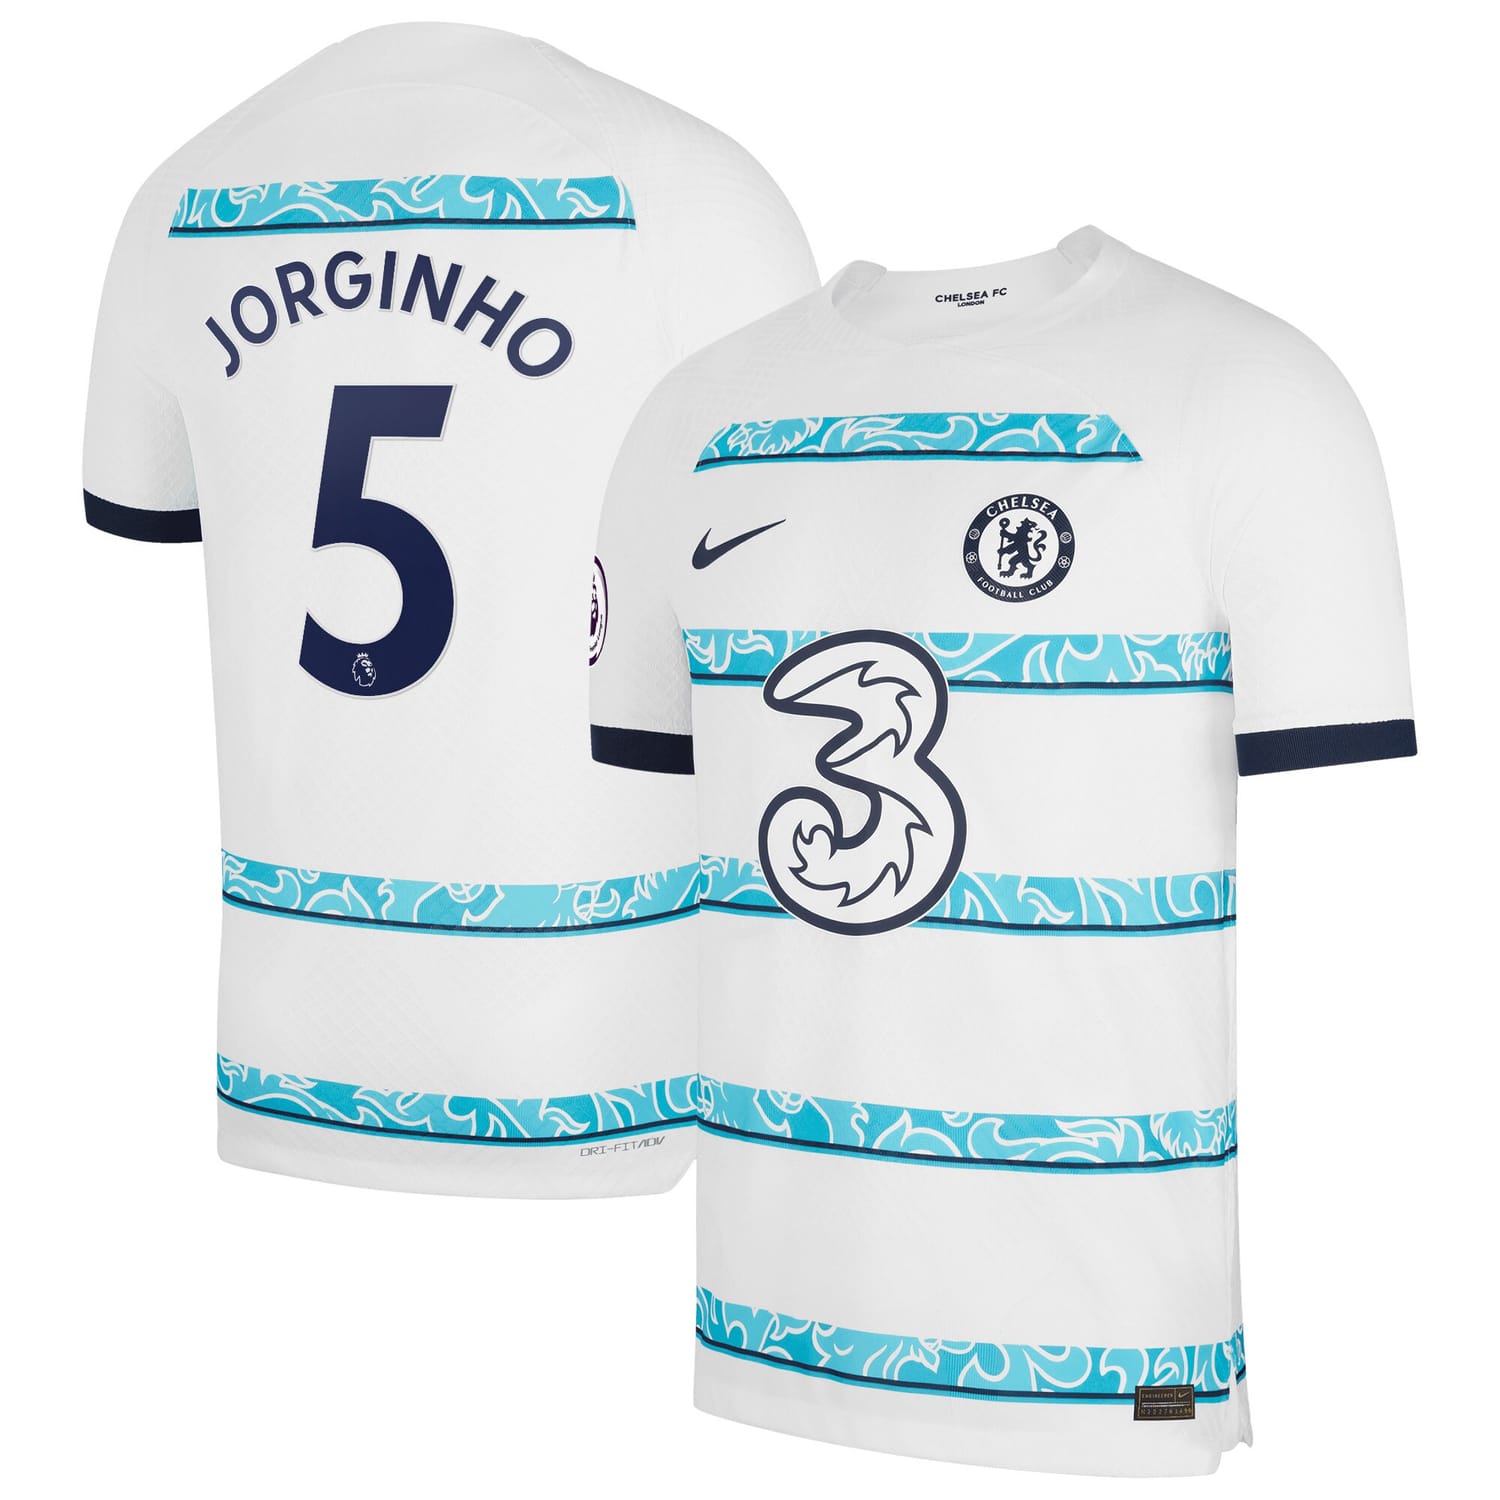 Premier League Chelsea Away Authentic Jersey Shirt White 2022-23 player Jorginho printing for Men